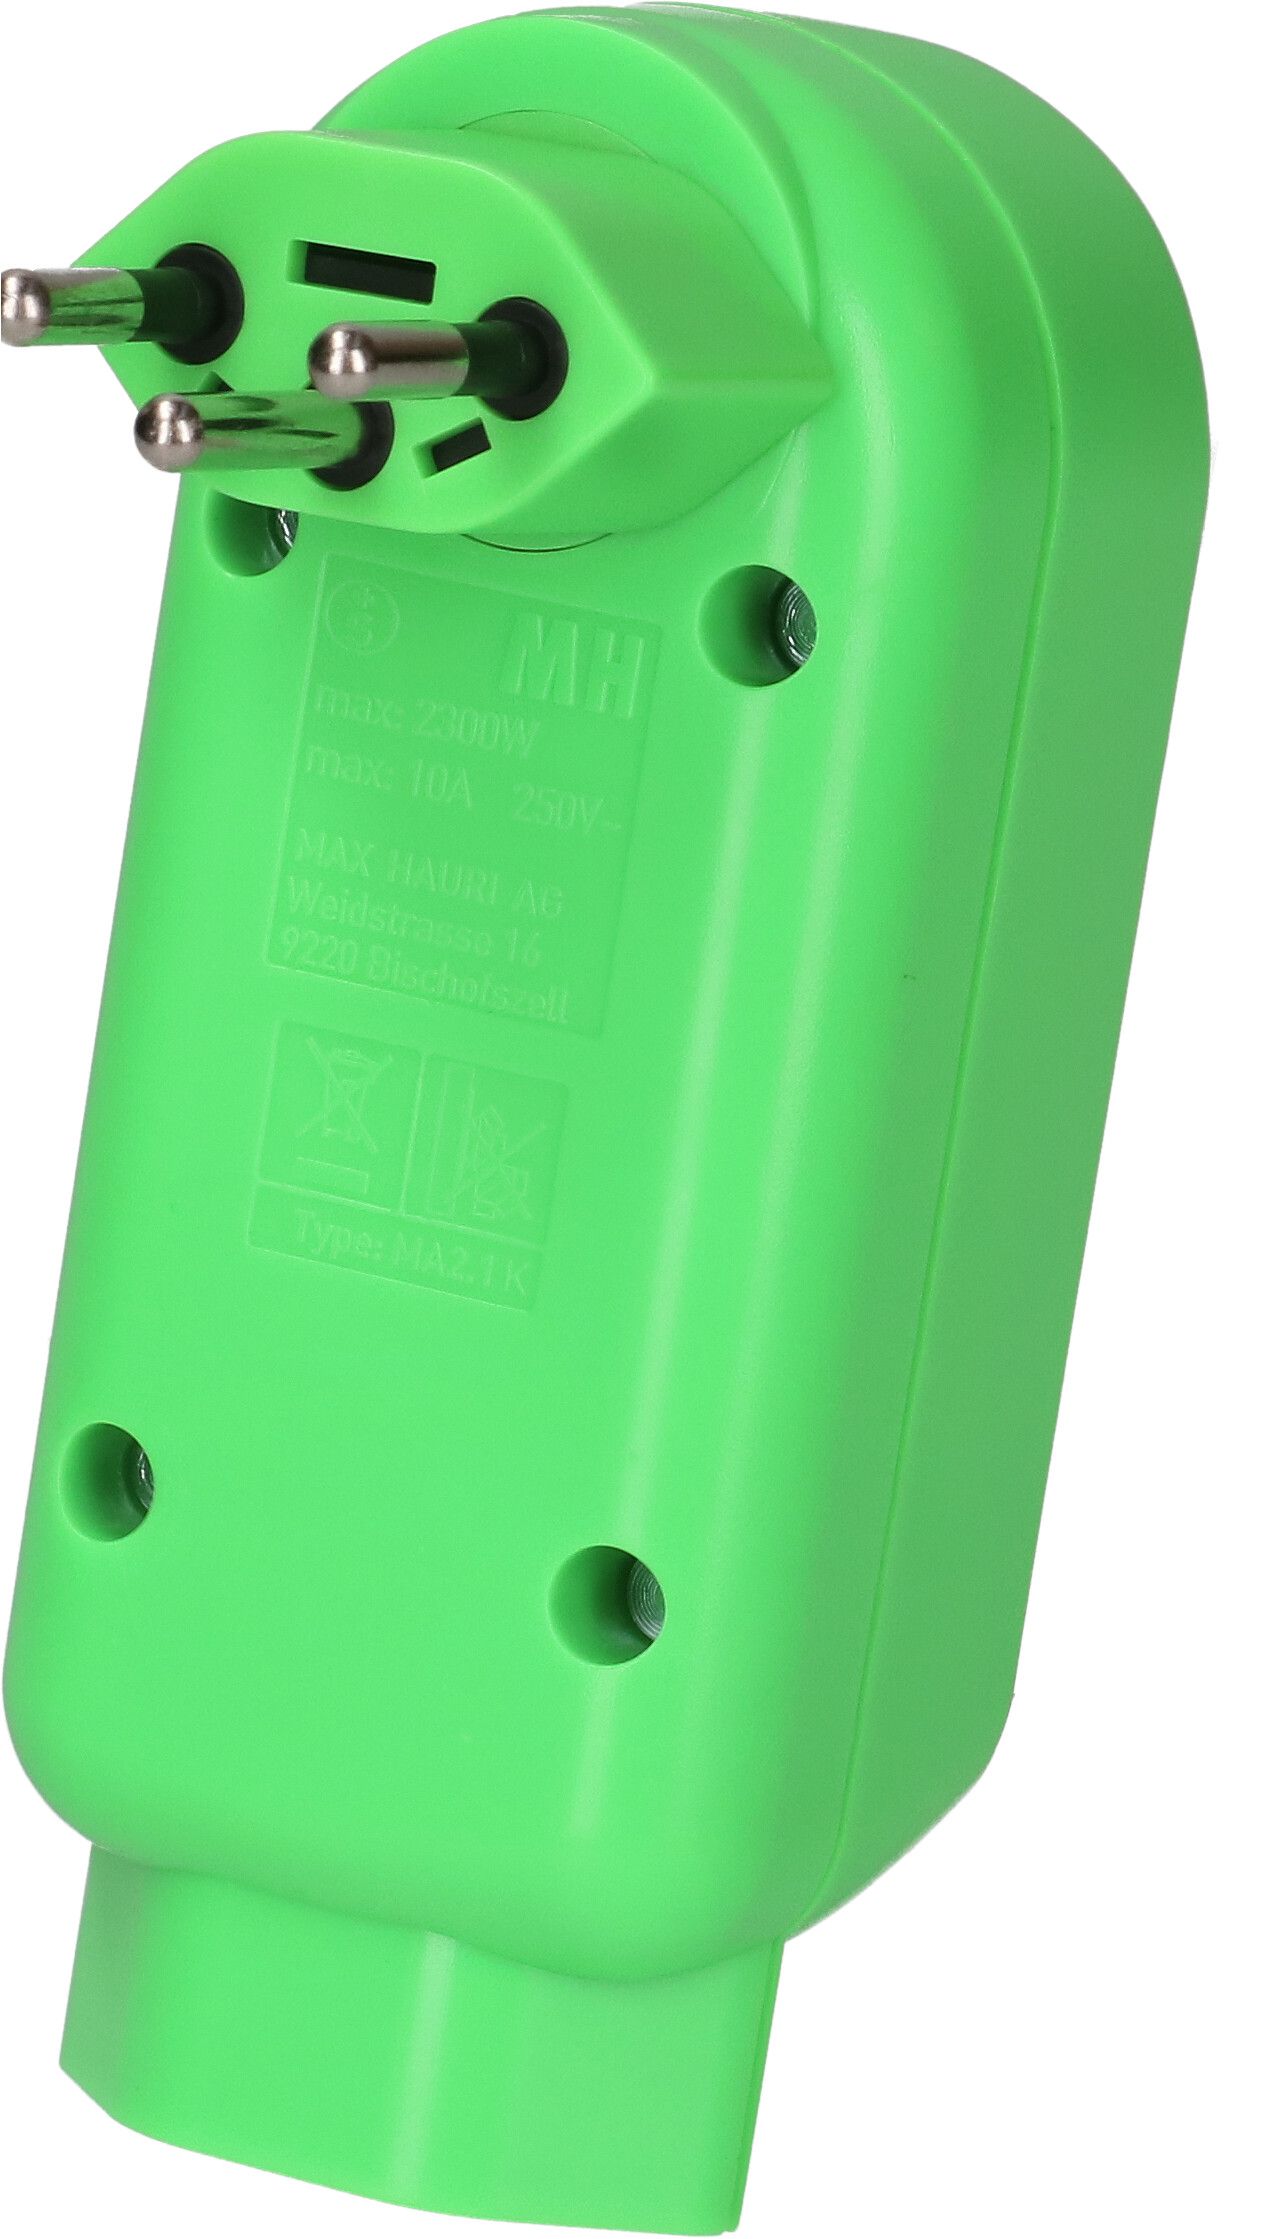 Spina multipla maxADAPTturn 2+1x tipo 13 verde fluo ruotabile BS